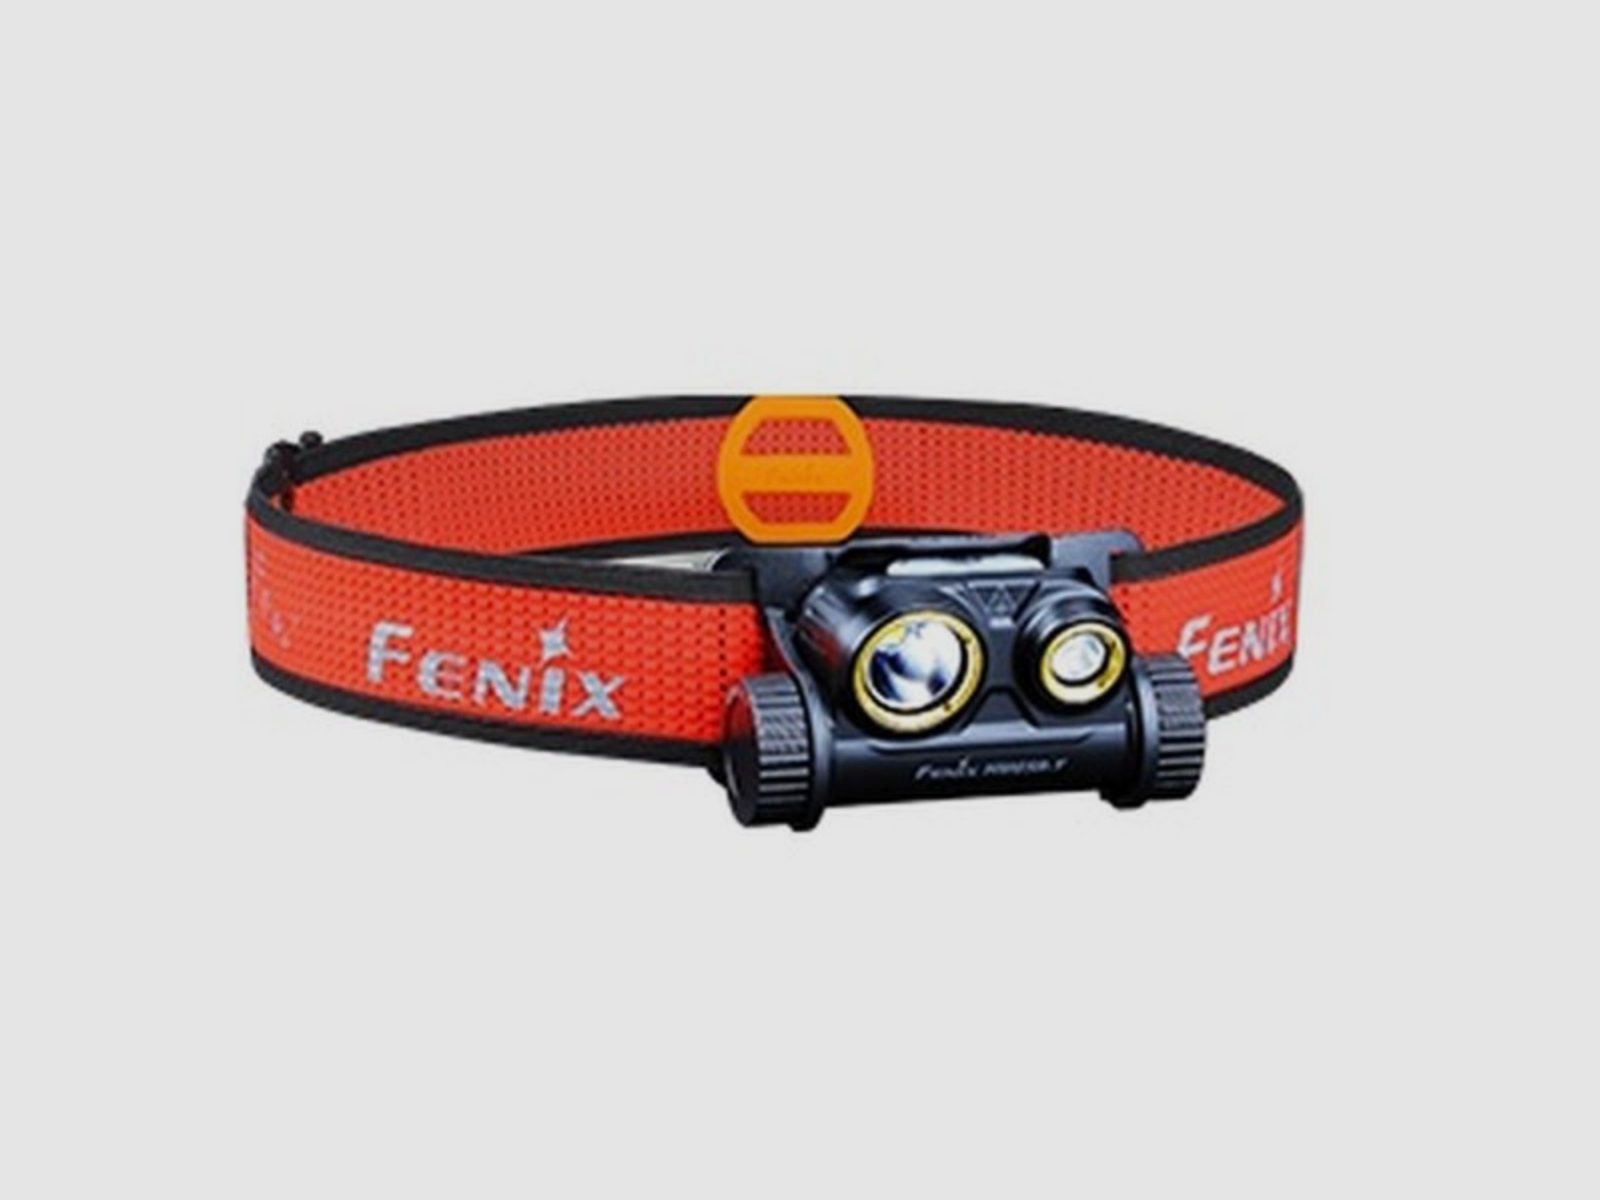 Fenix FEHM65RT LED Stirnlampe HM65R-T 1500 Lumen